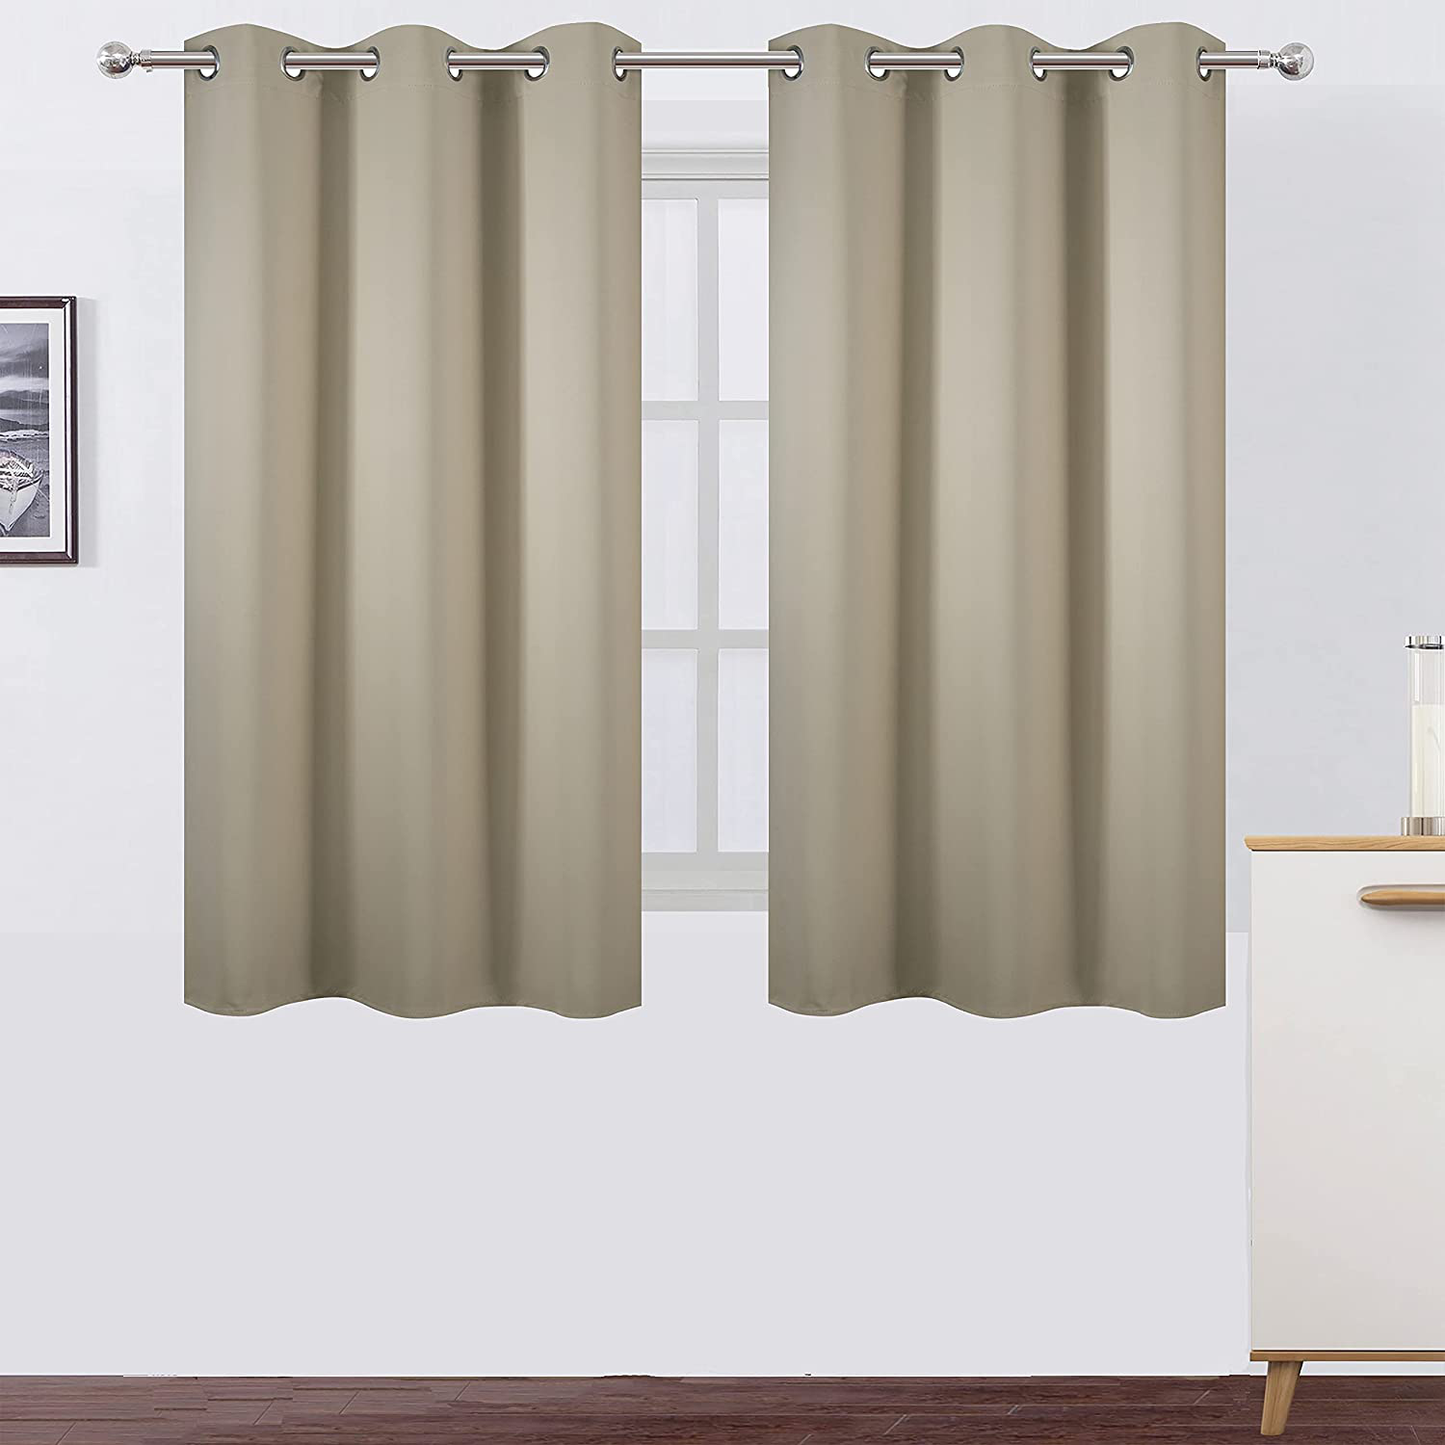 LEMOMO Navy Blue Blackout Curtains 52 x 84 inch/Set of 2 Curtain Panels Room Darkening Bedroom Curtains